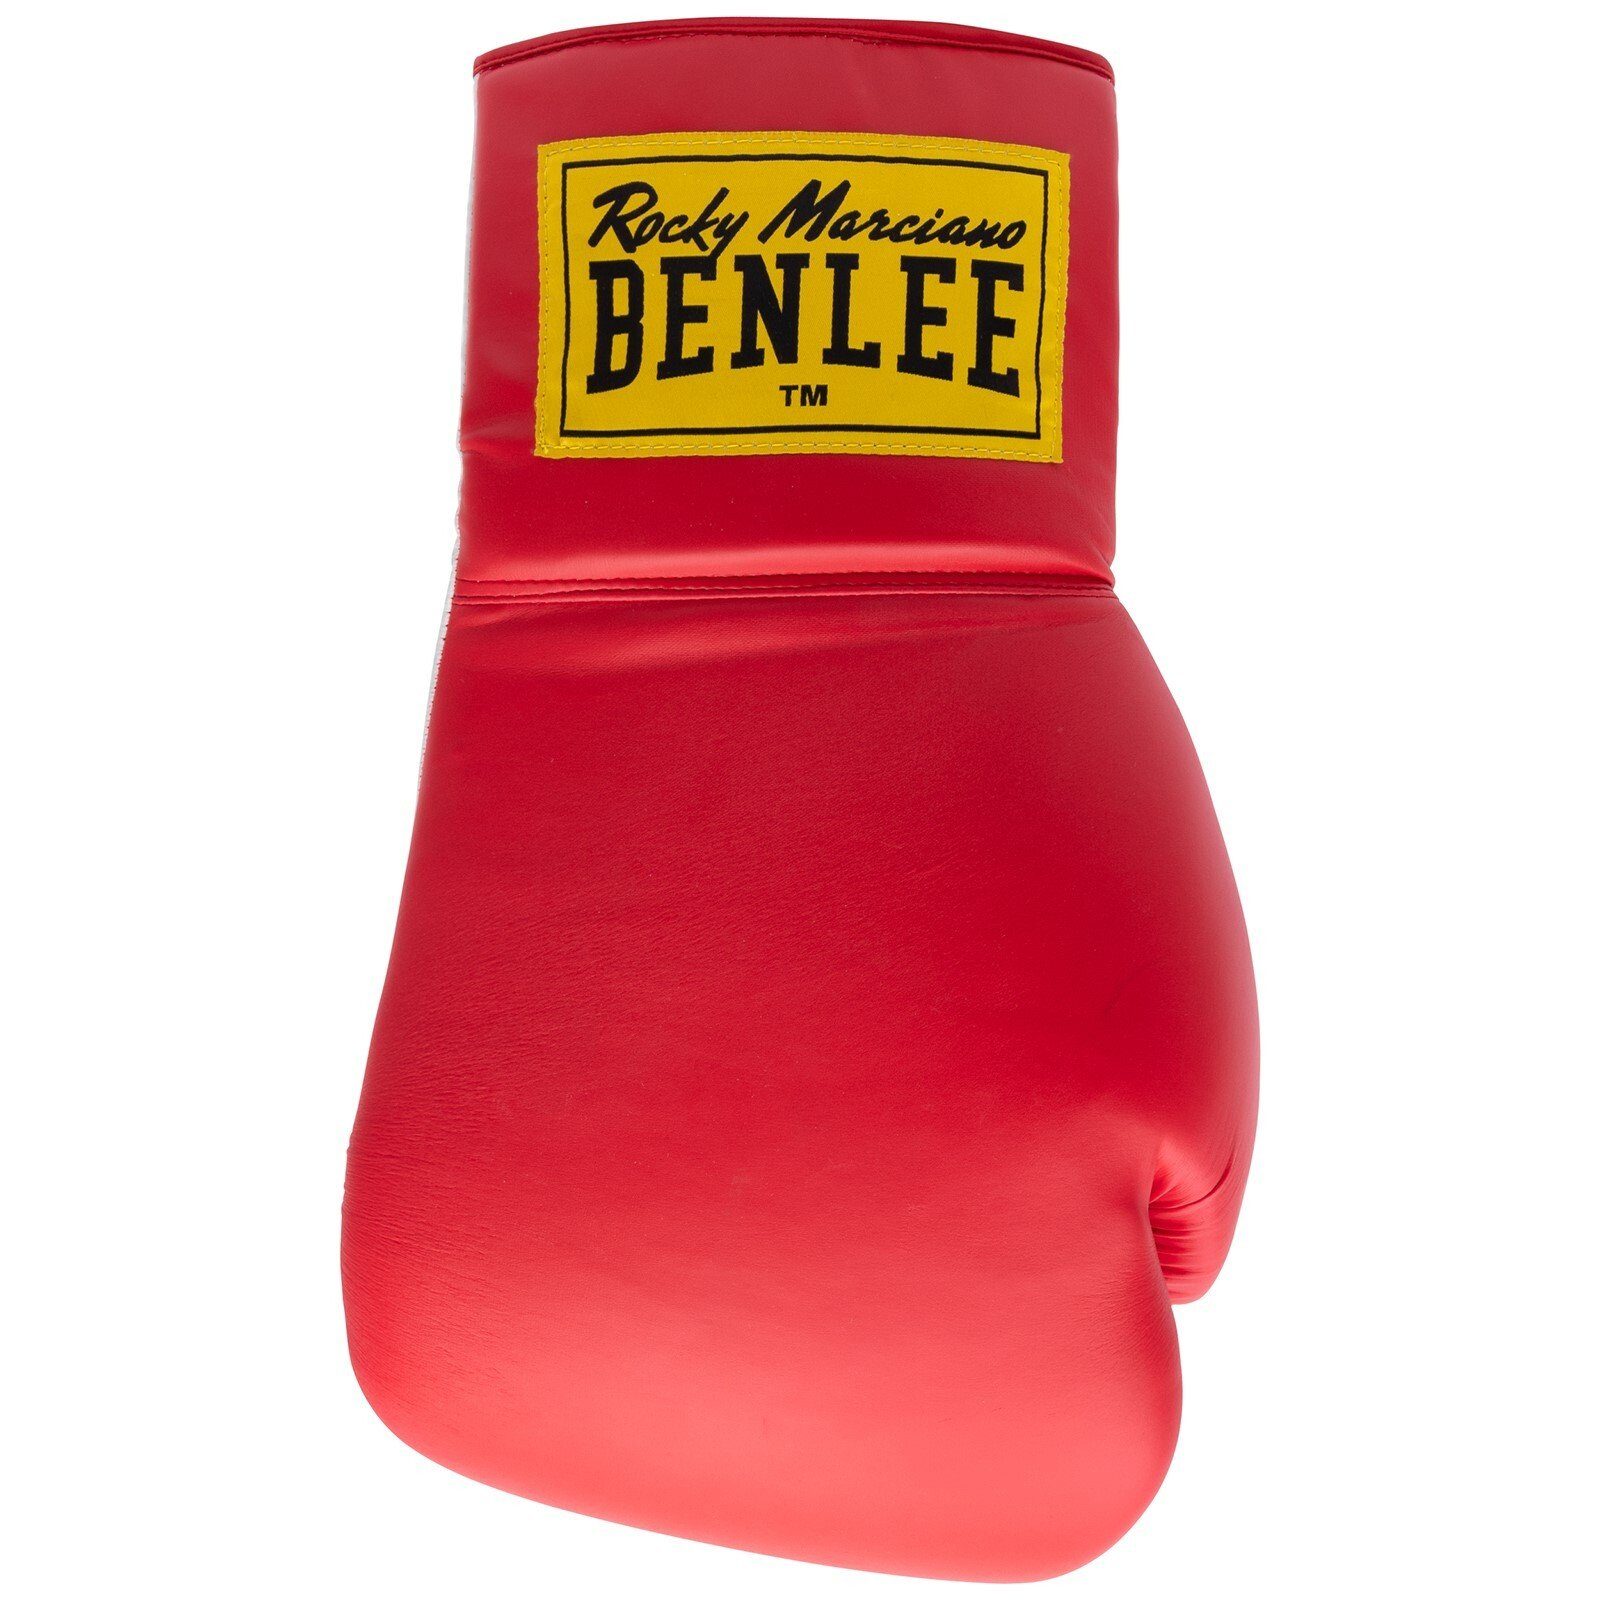 Benlee Rocky Marciano Boxhandschuhe GIANT BENLEE Red | Boxhandschuhe